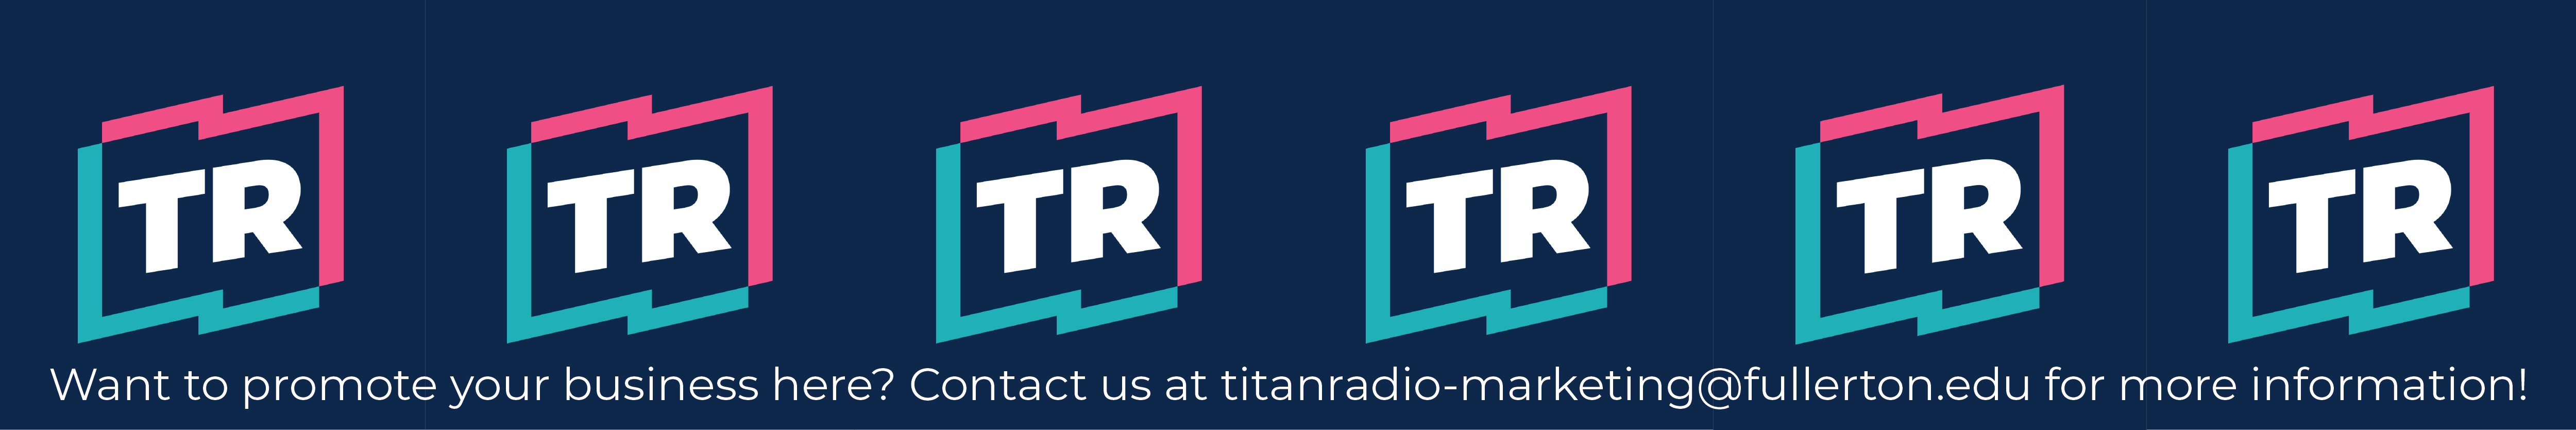 Titan Radio banner 